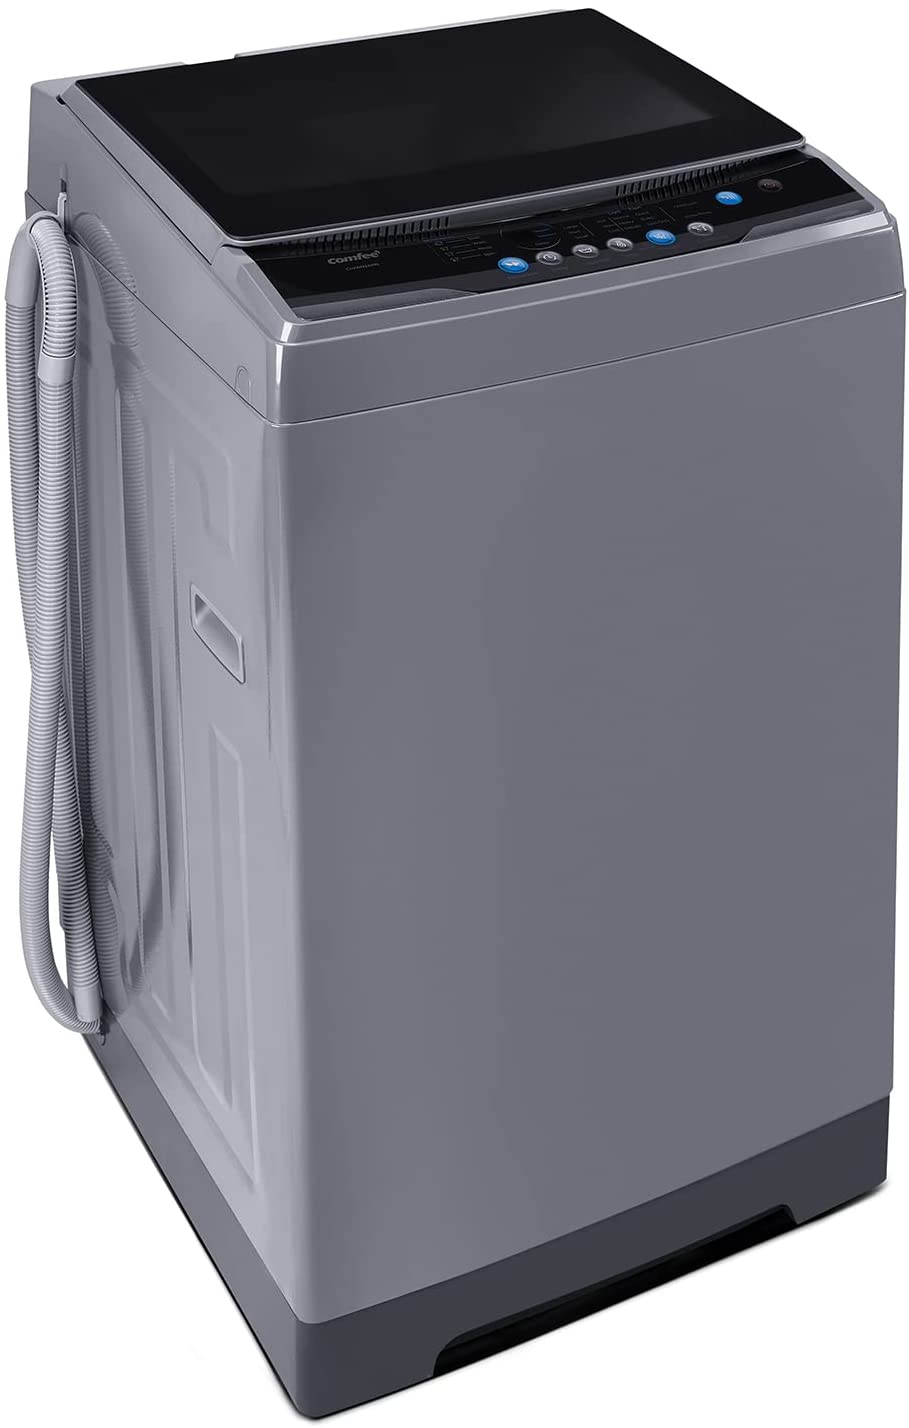 COMFEE’ 1.6-Cubic Feet Child Lock Portable Washing Machine